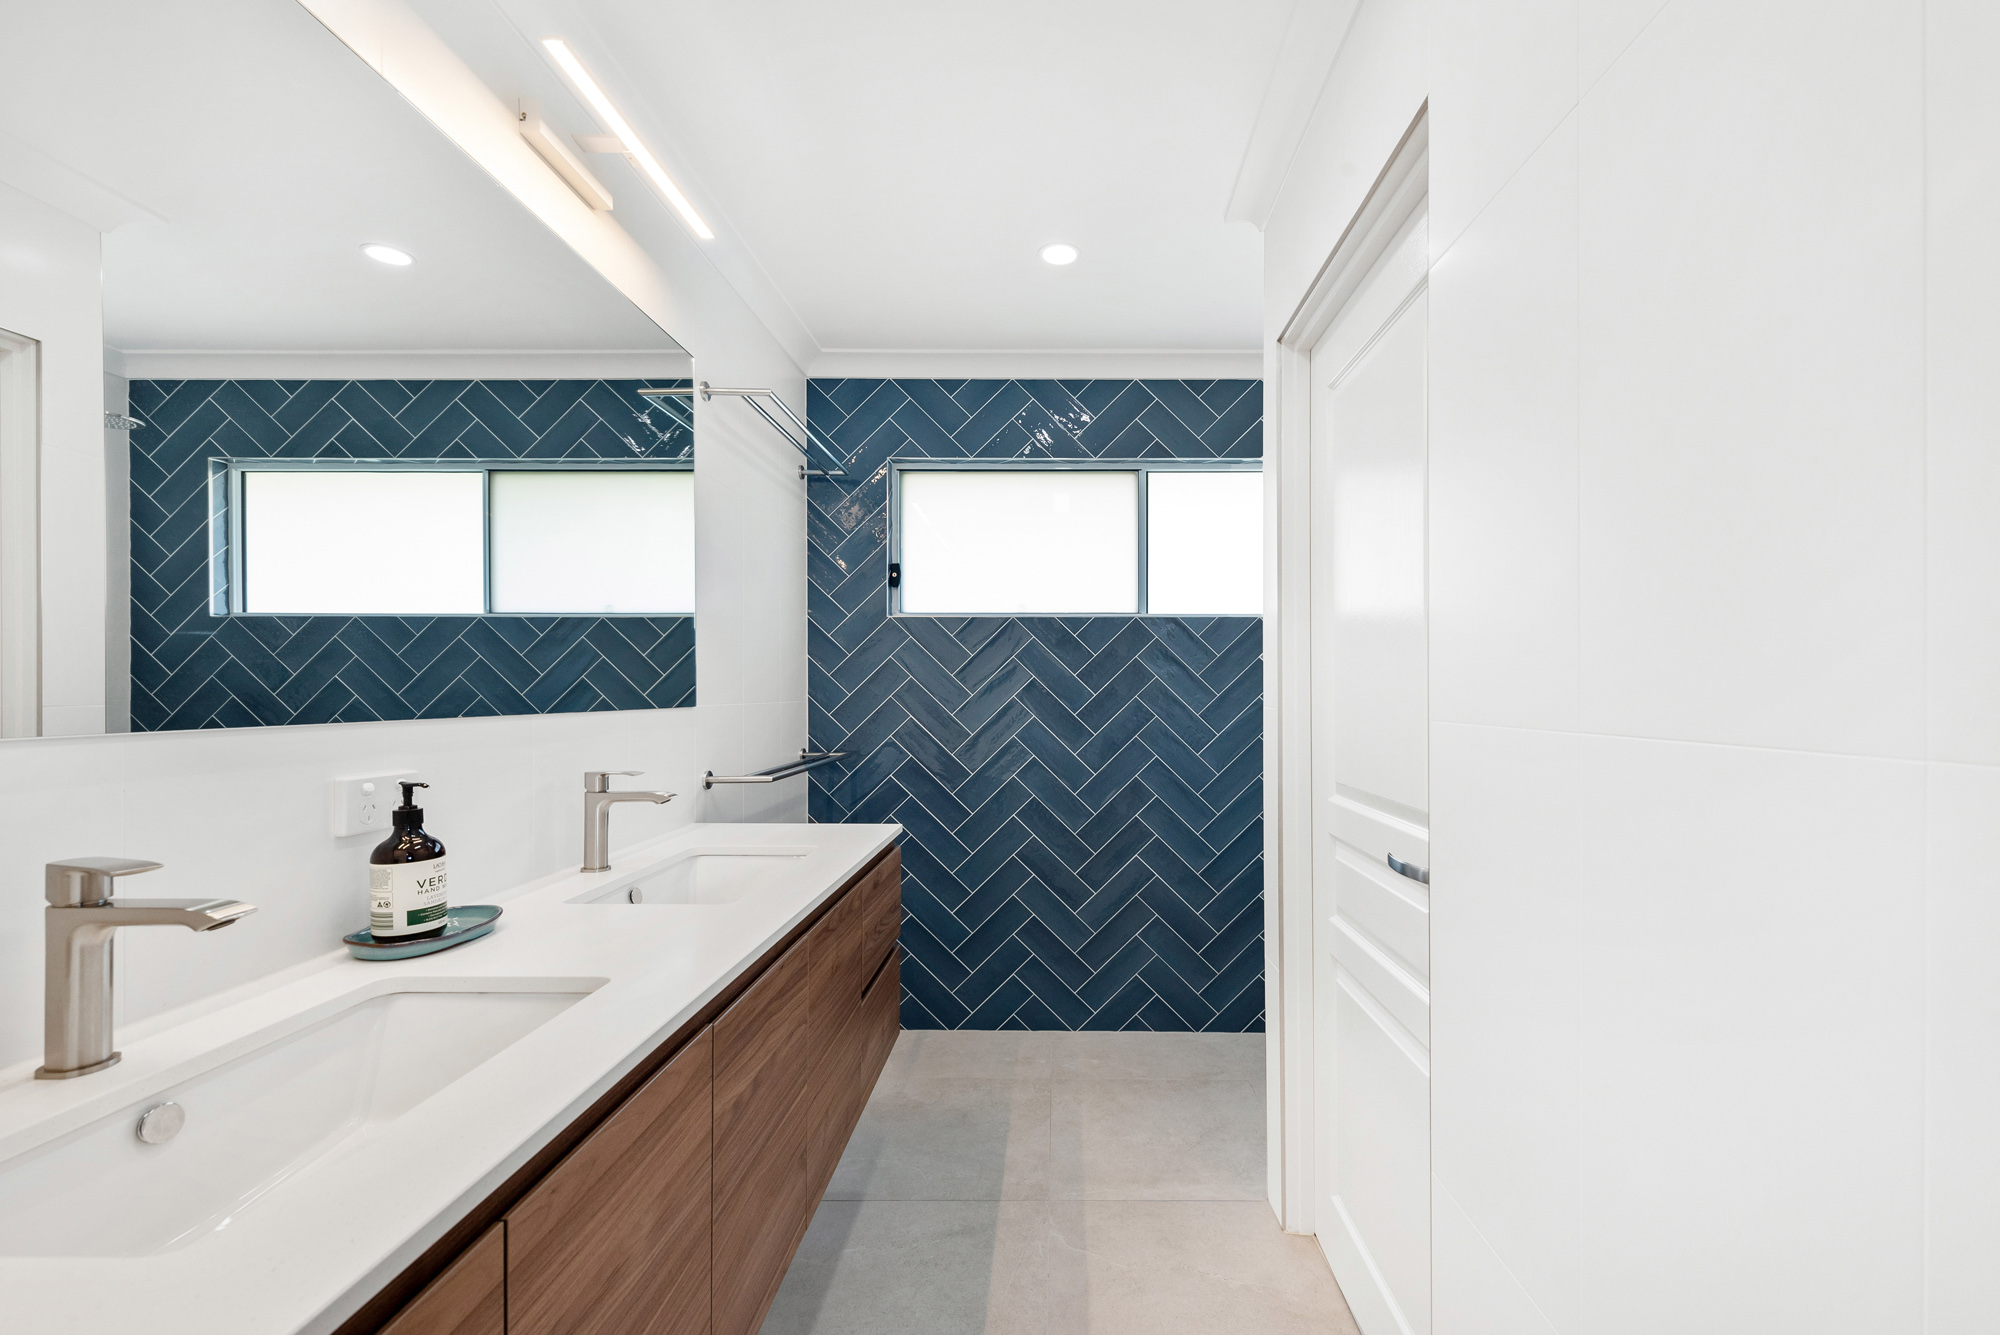 Second storey ensuite navy herringbone tiles separate toilet double basin vanity with mirror lights